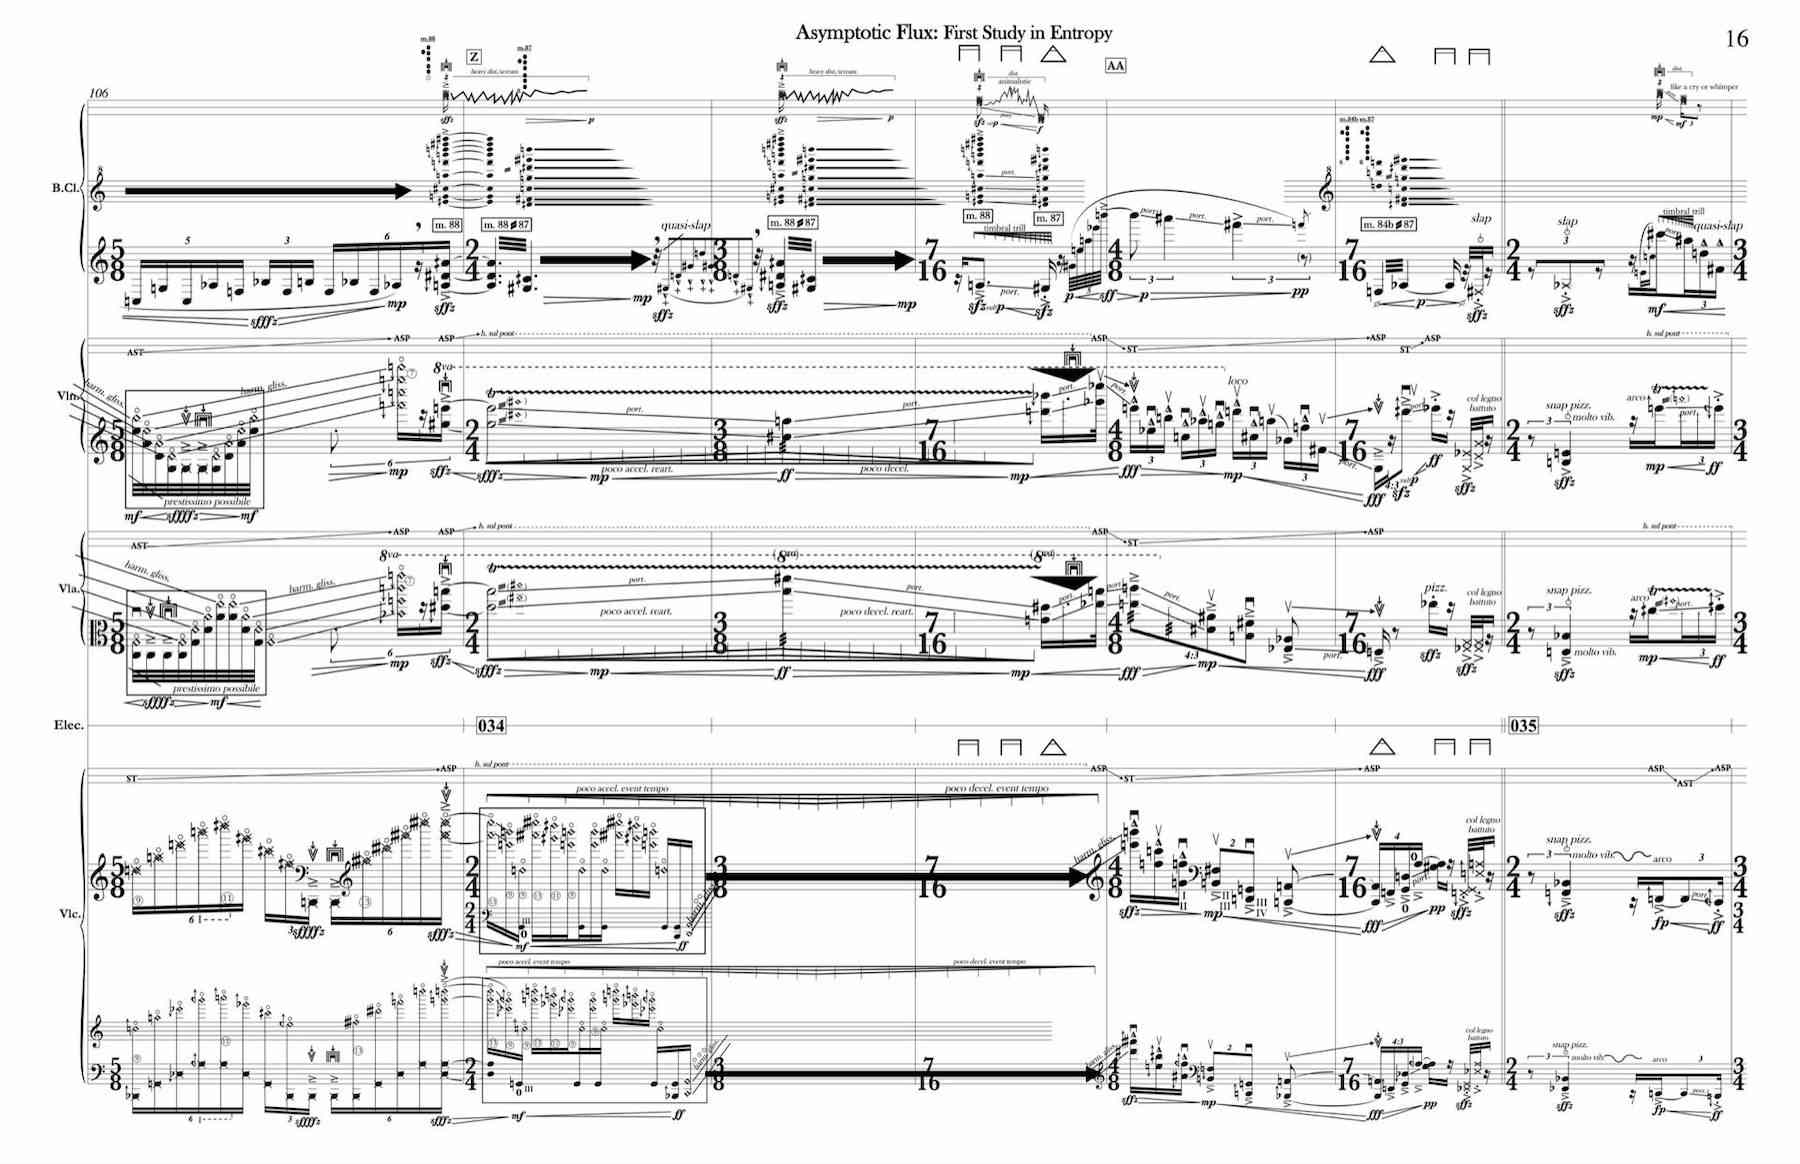 2012-af1-sketches-score-switch-manuscript